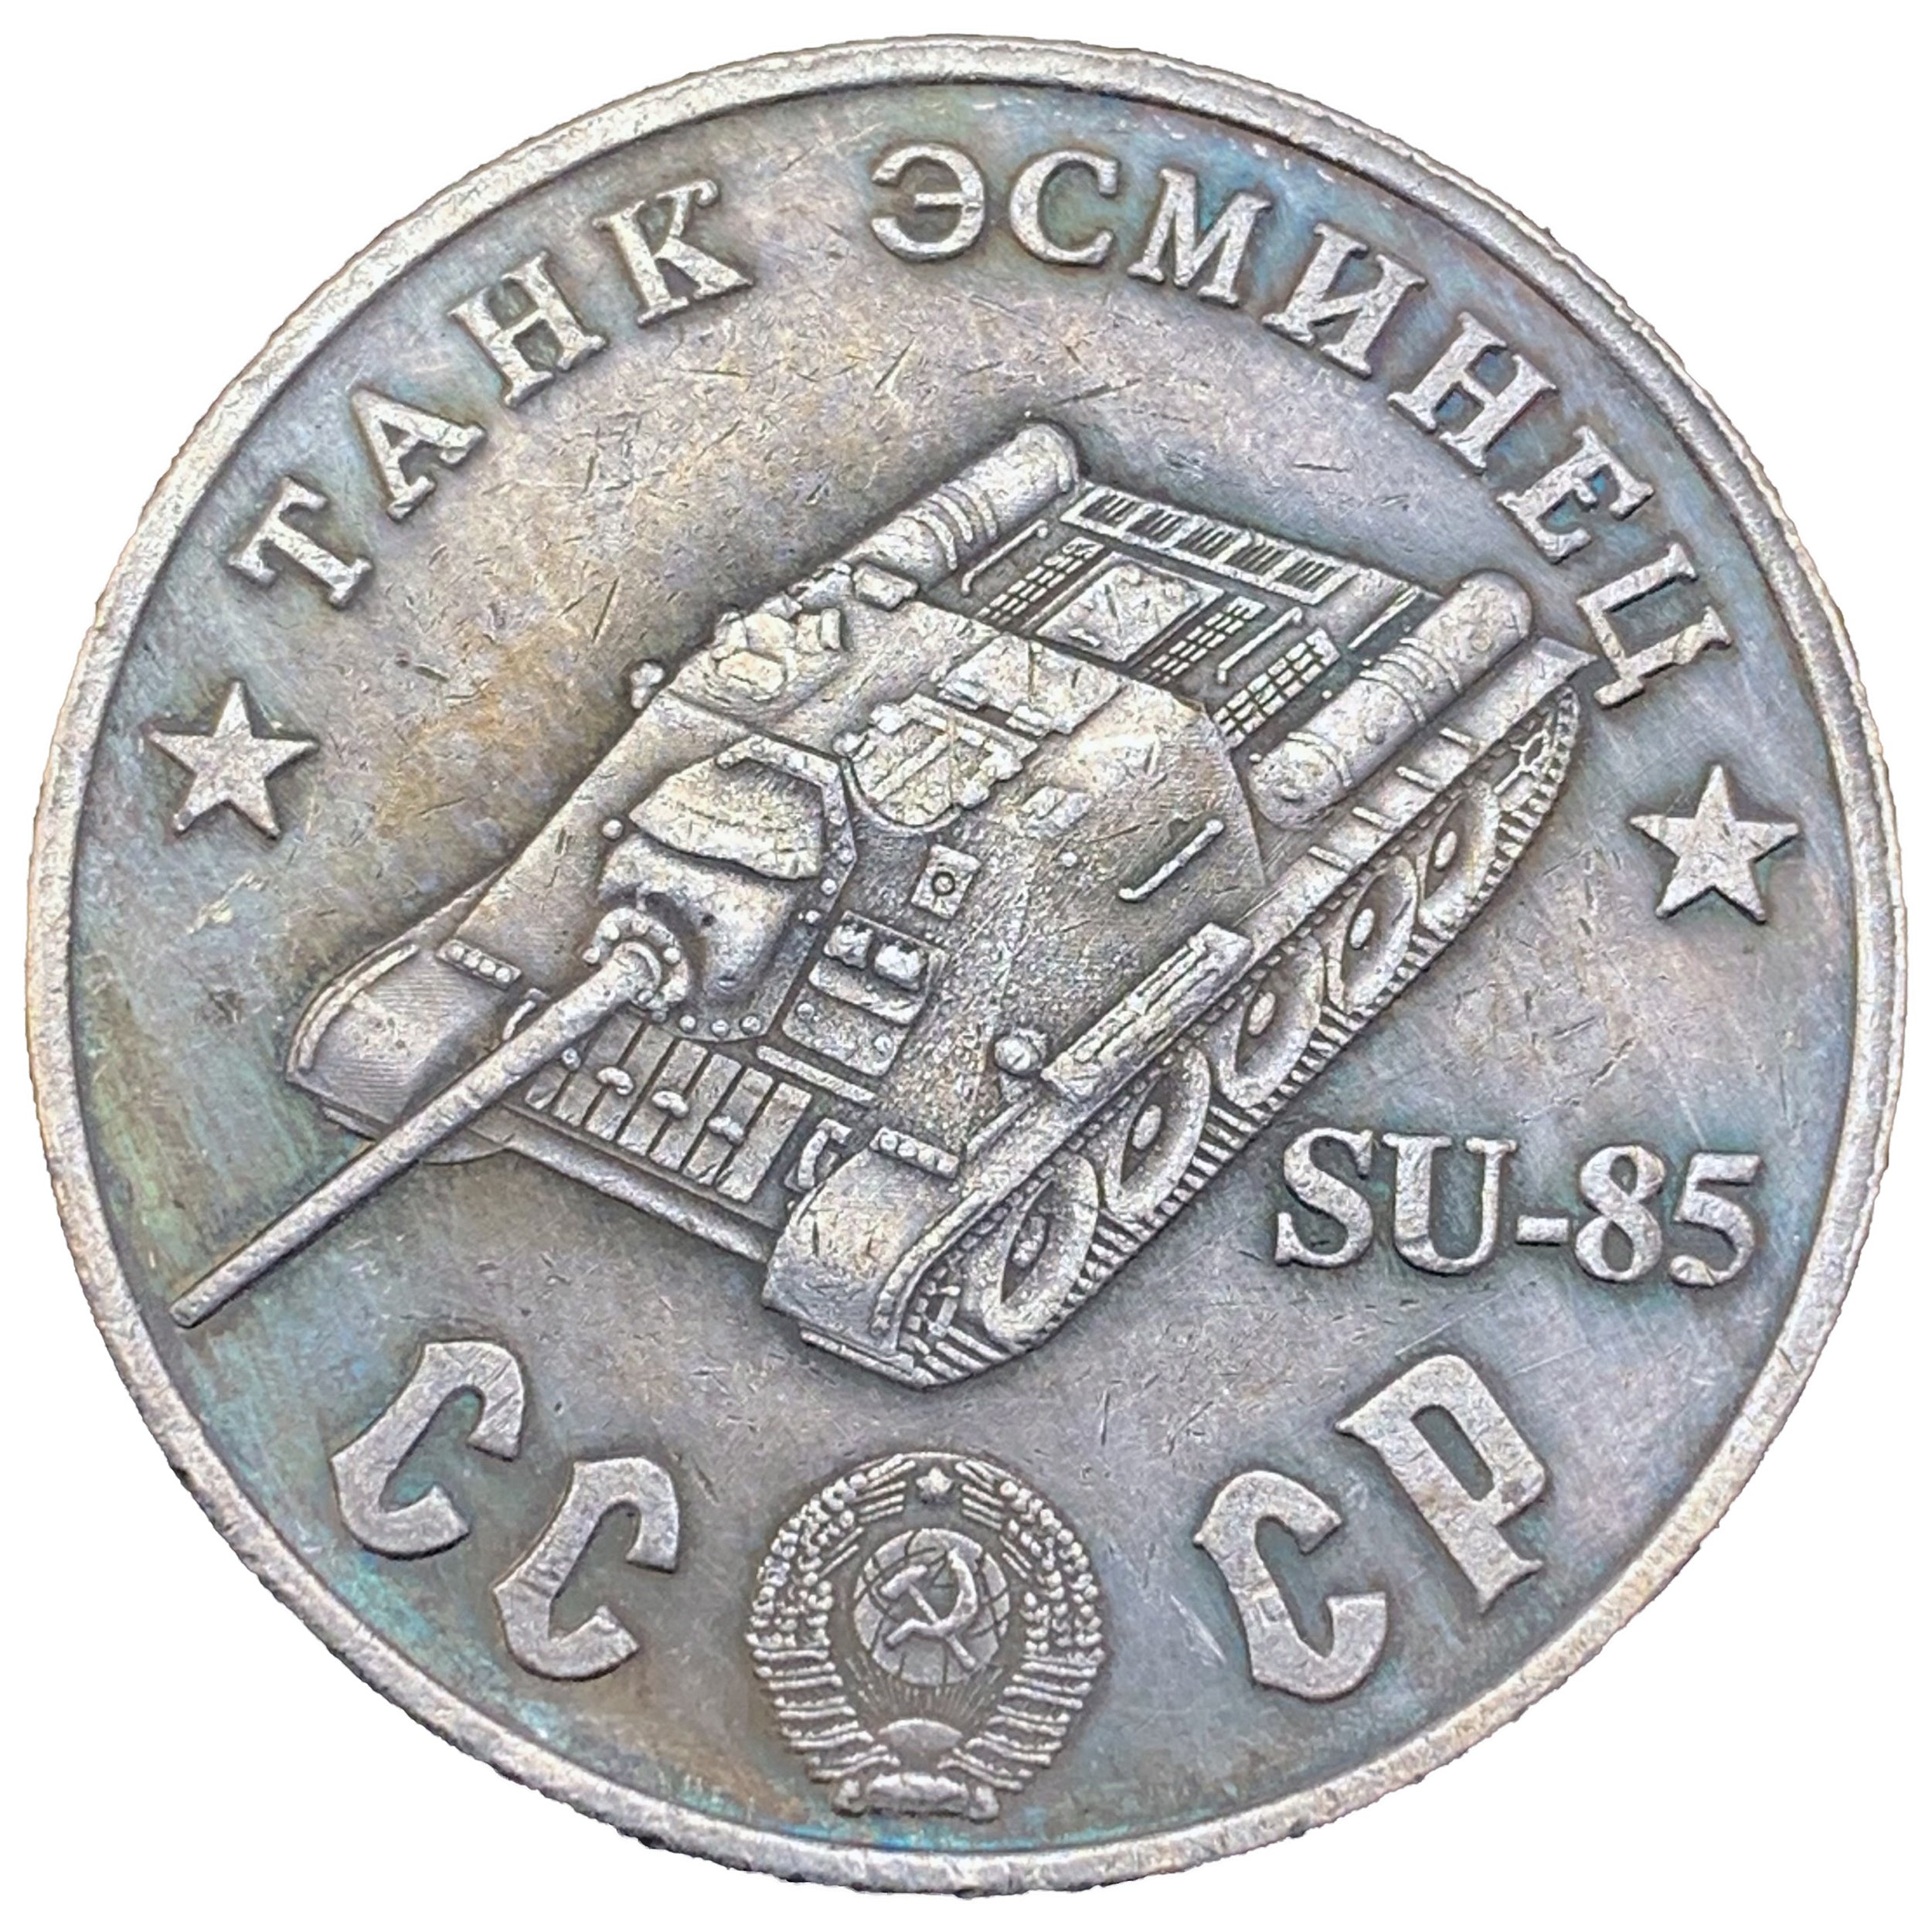 SU-85 Tank 50 Rubles Soviet Union USSR WW2 Exonumia Coin